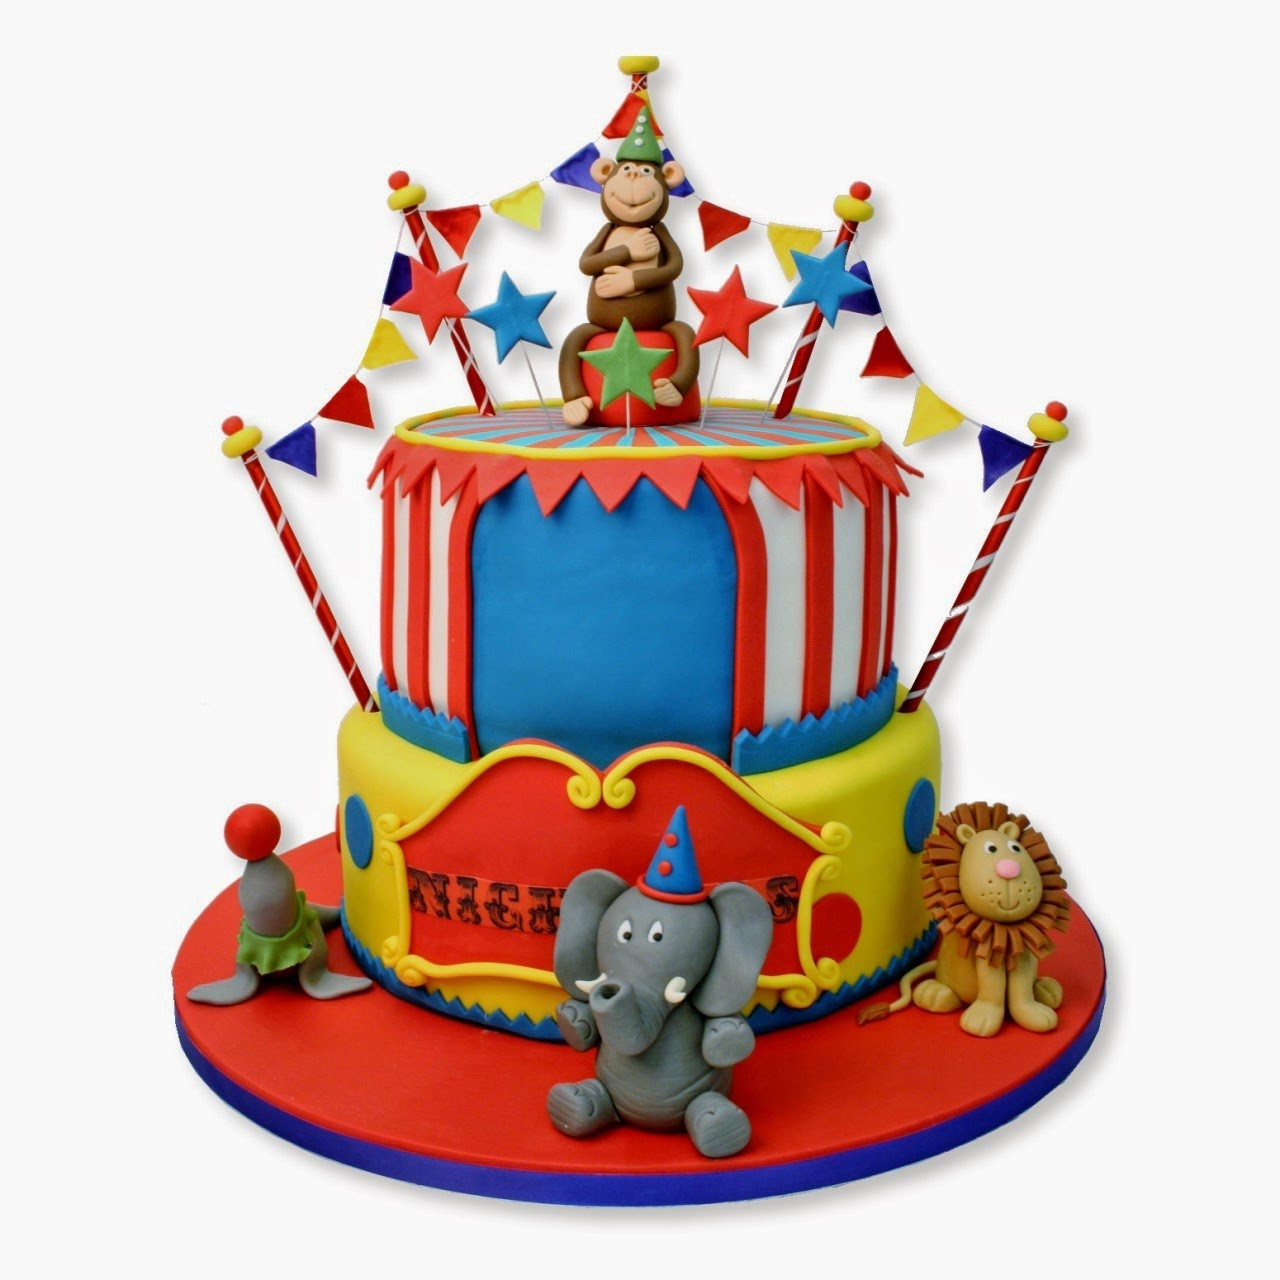 Circus Birthday Cake
 My Own Party Ideas Ideas para Fiestas Infantiles El Circo